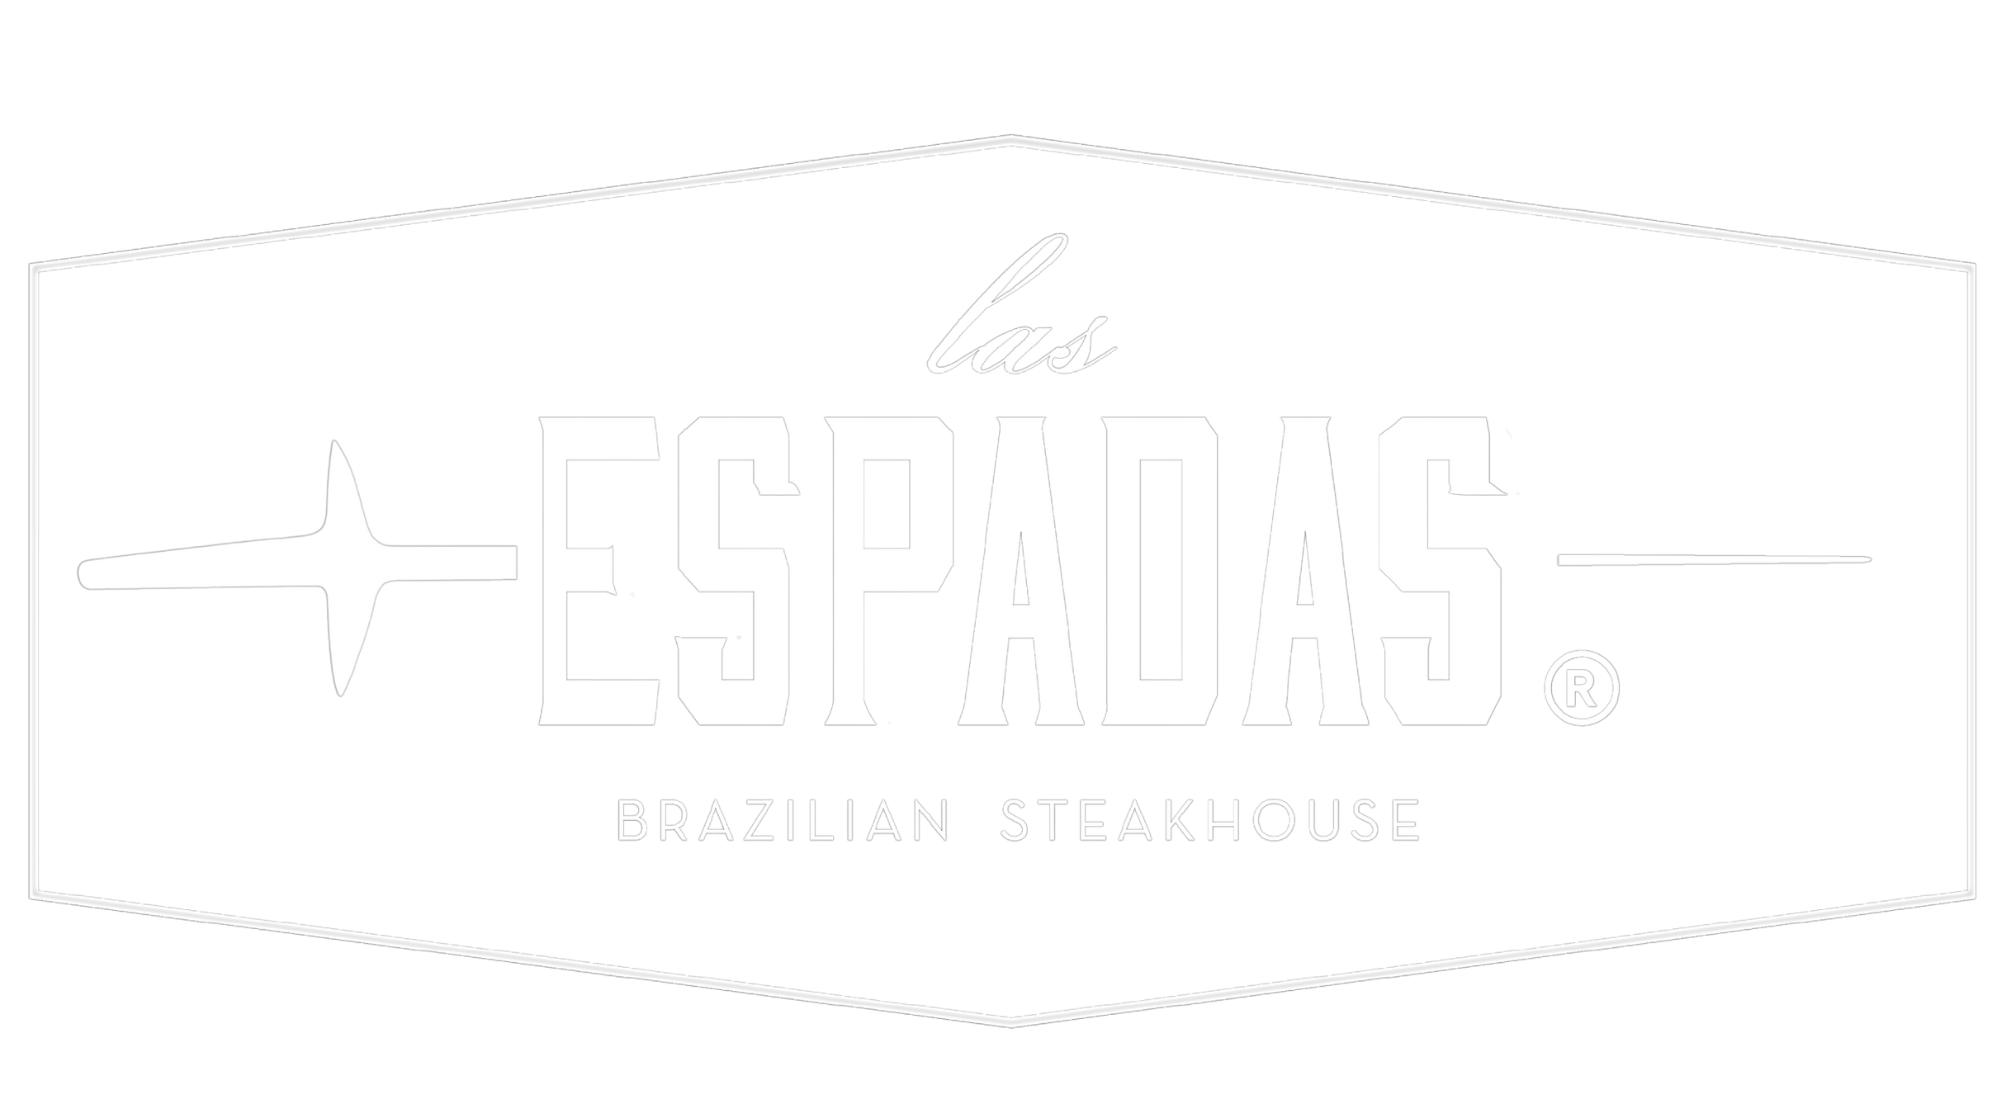 Las Espadas Brazilian Steakhouse